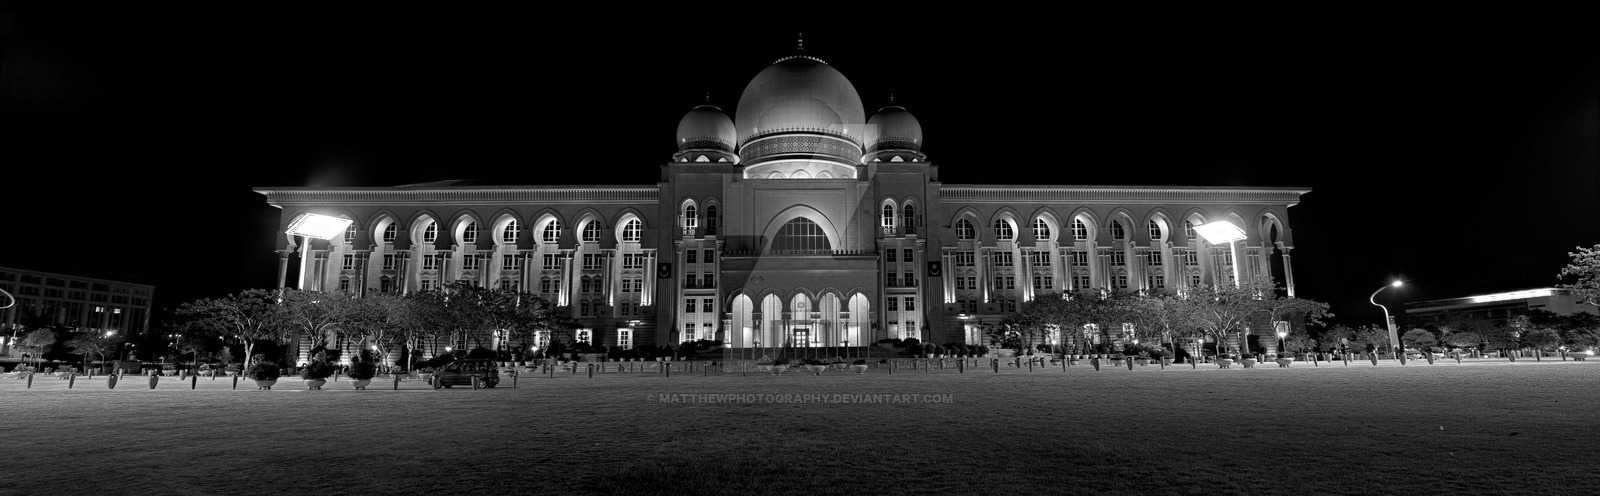 کاخ دادگستری مالزی 